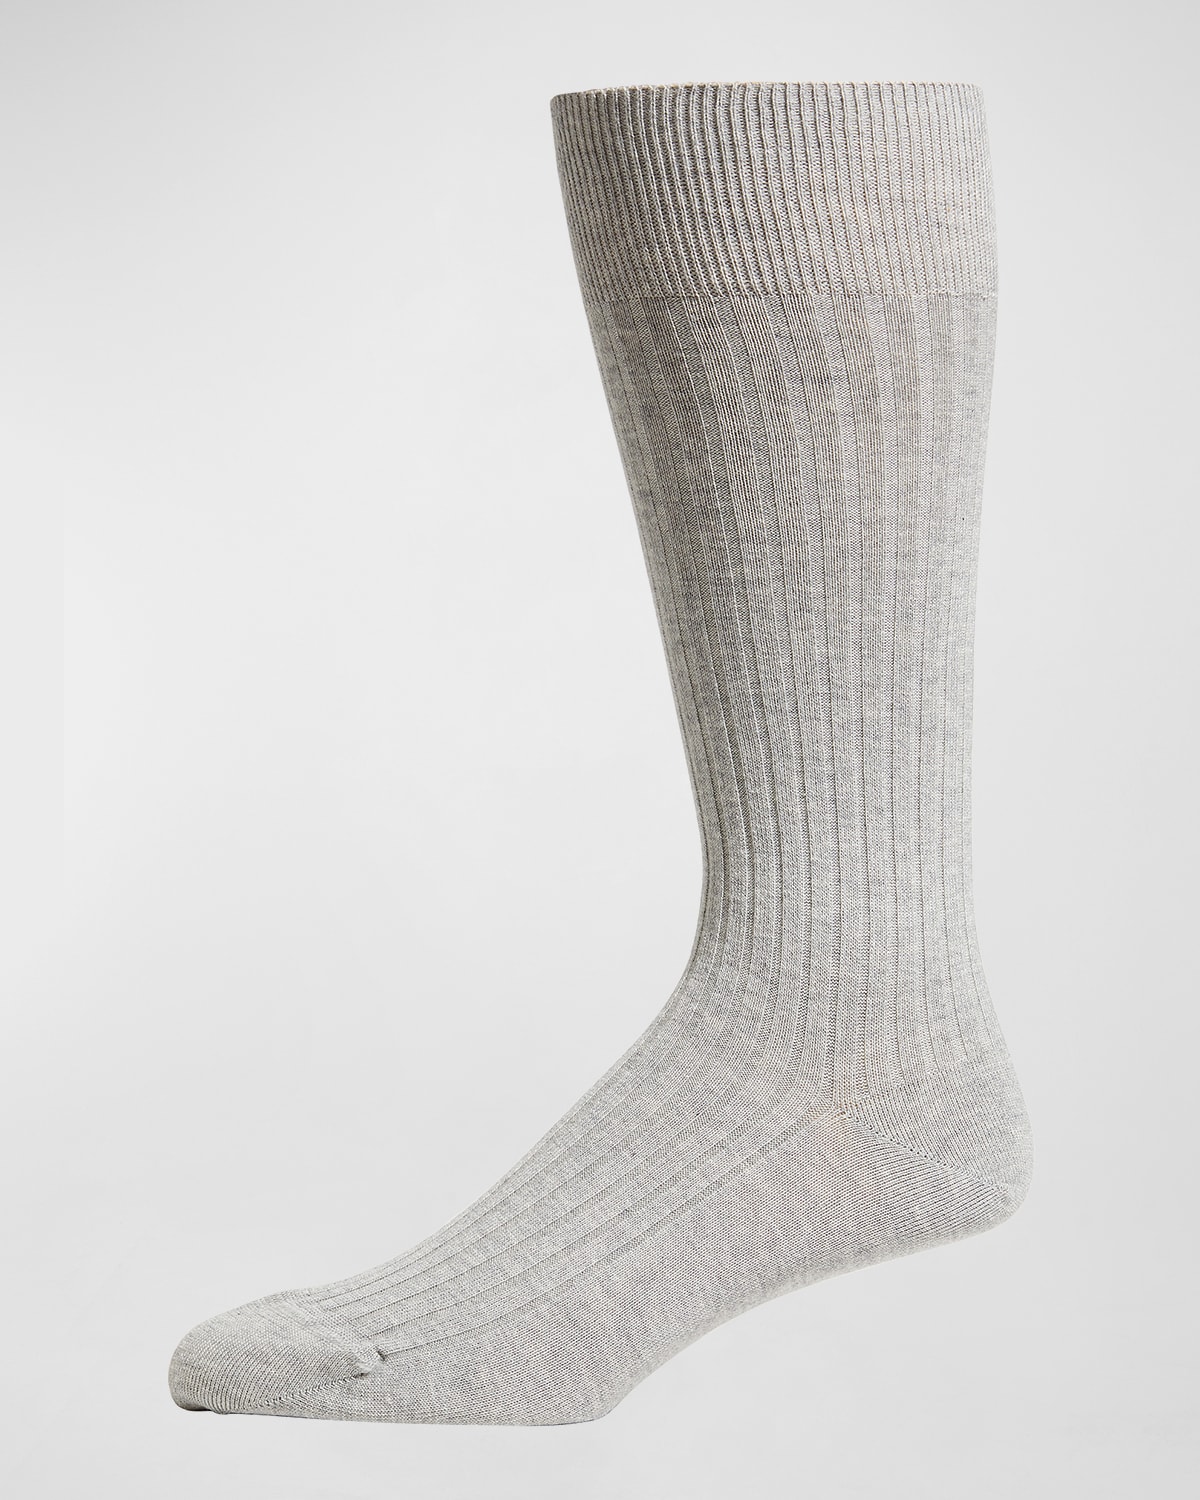 Neiman Marcus Men's Ribbed Cotton Crew Socks